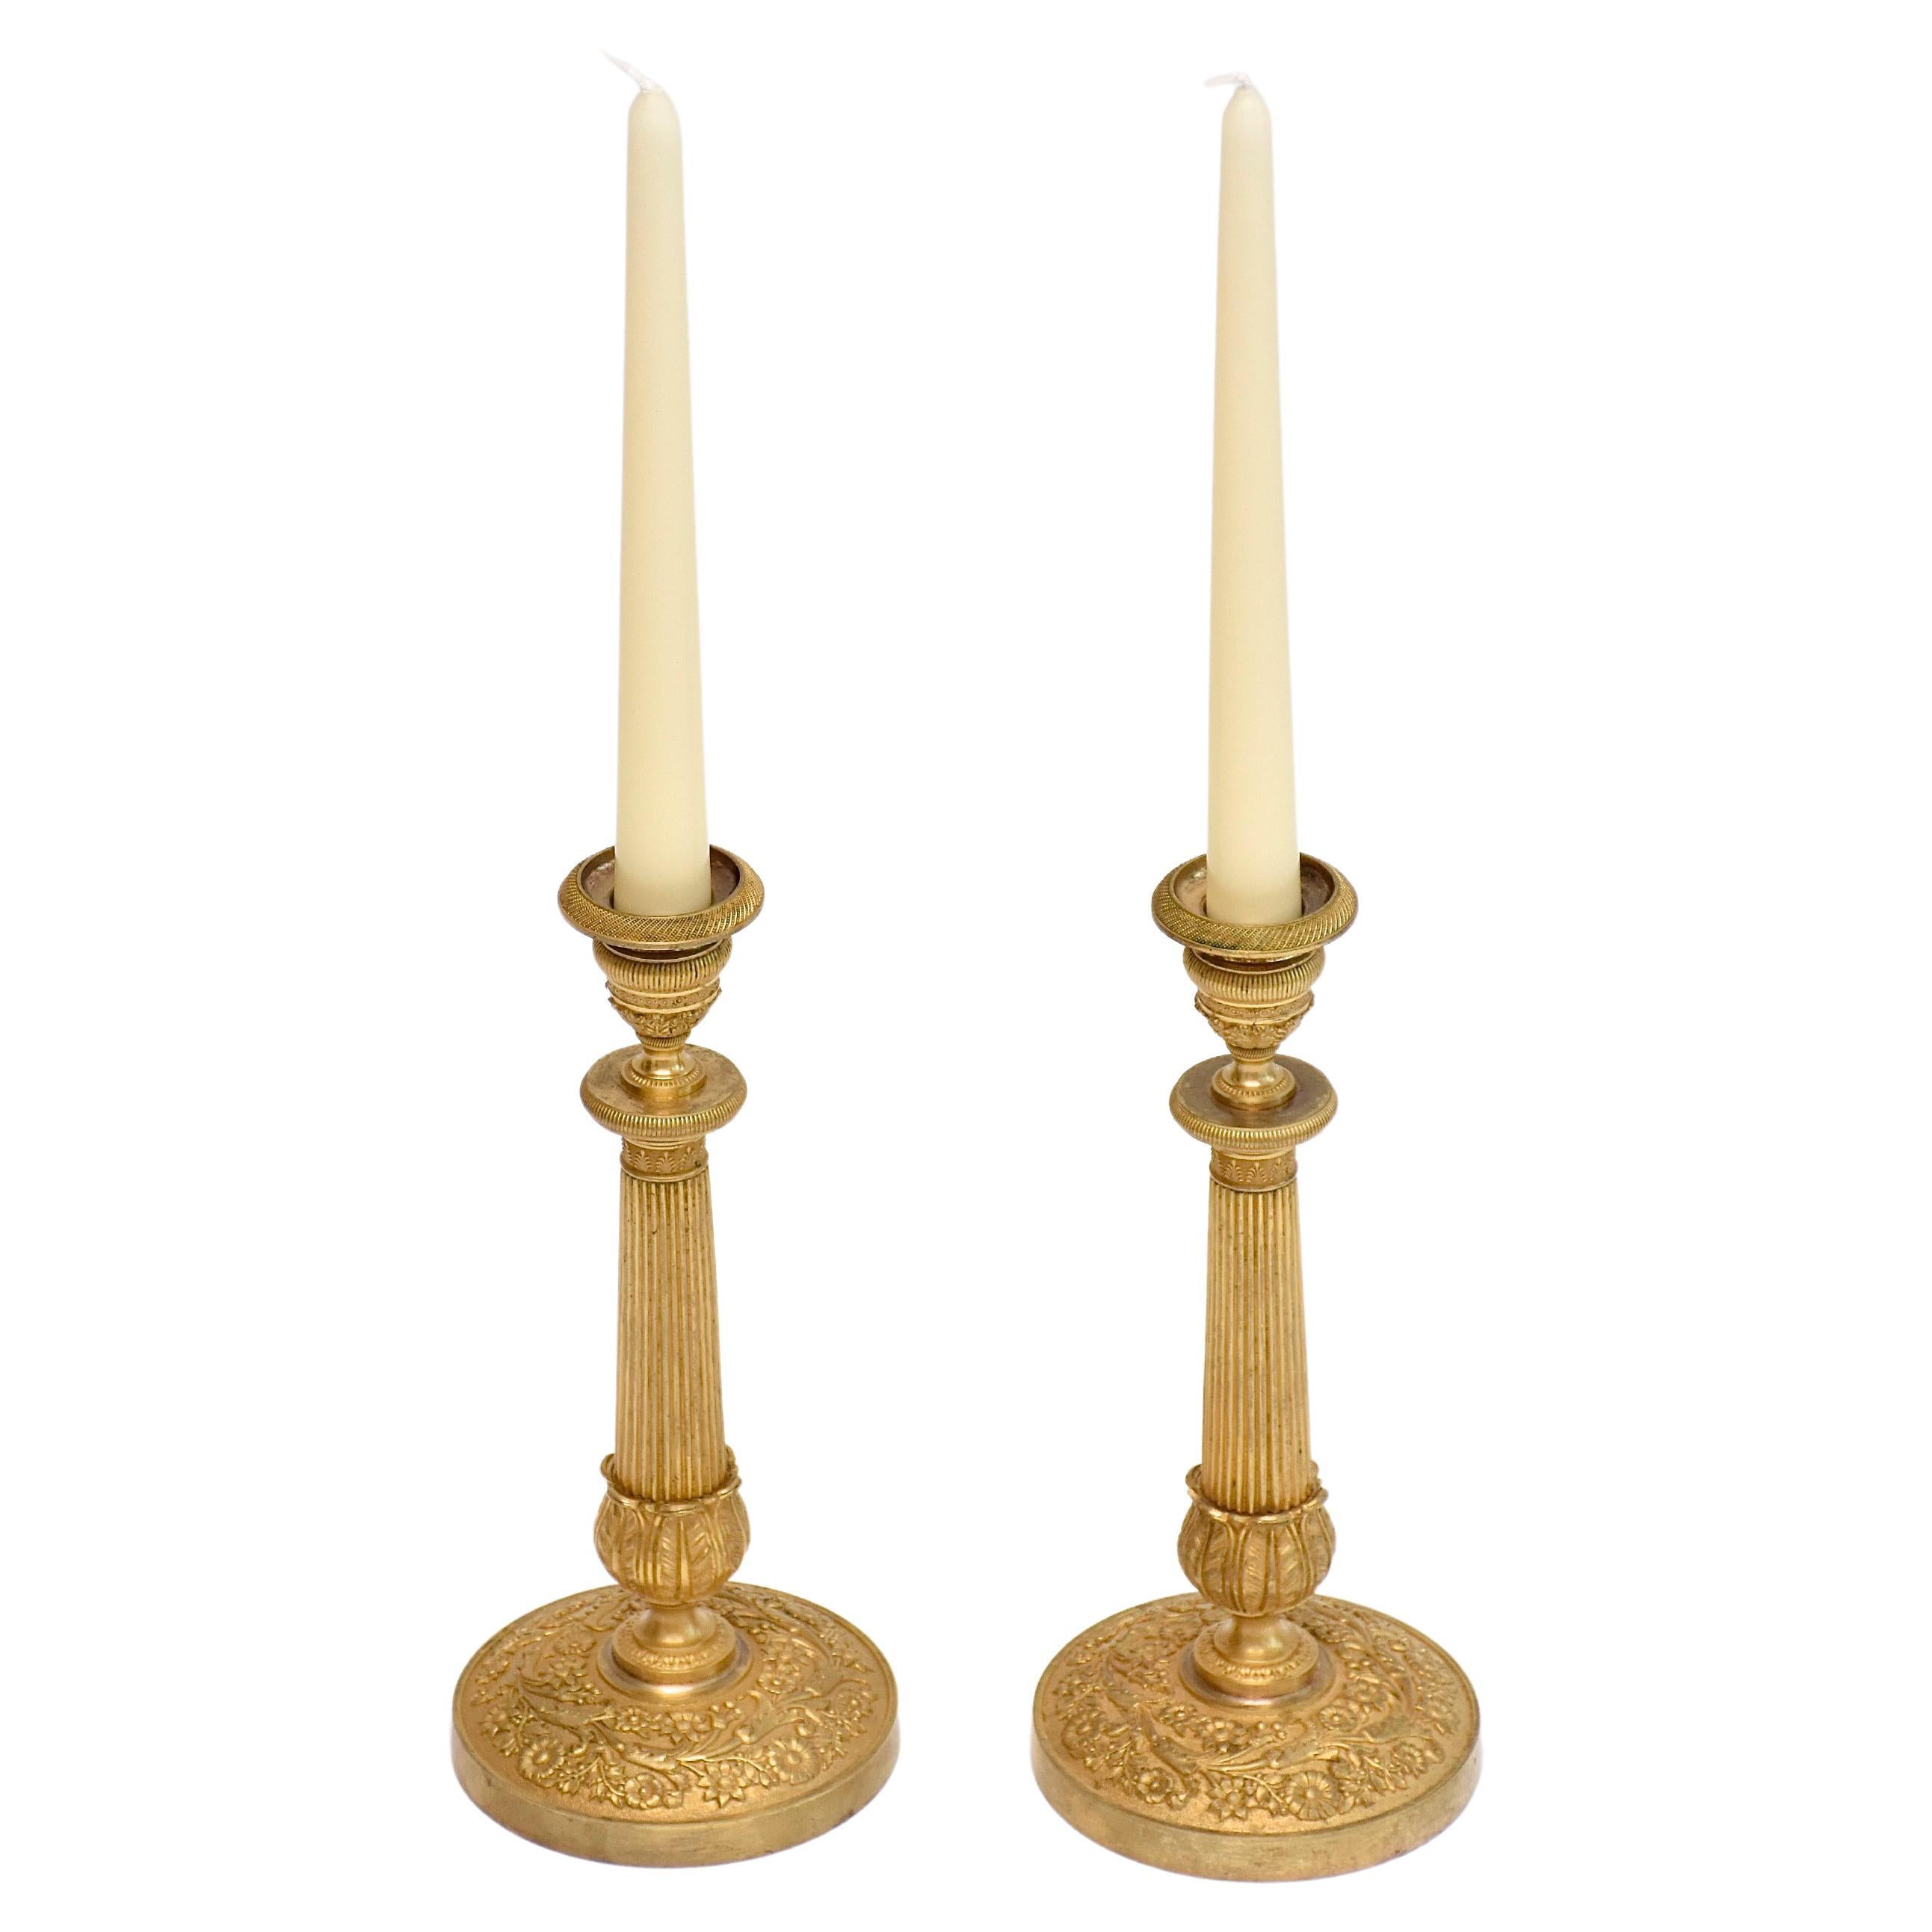 19th century gilt bronze French Empire candlesticks